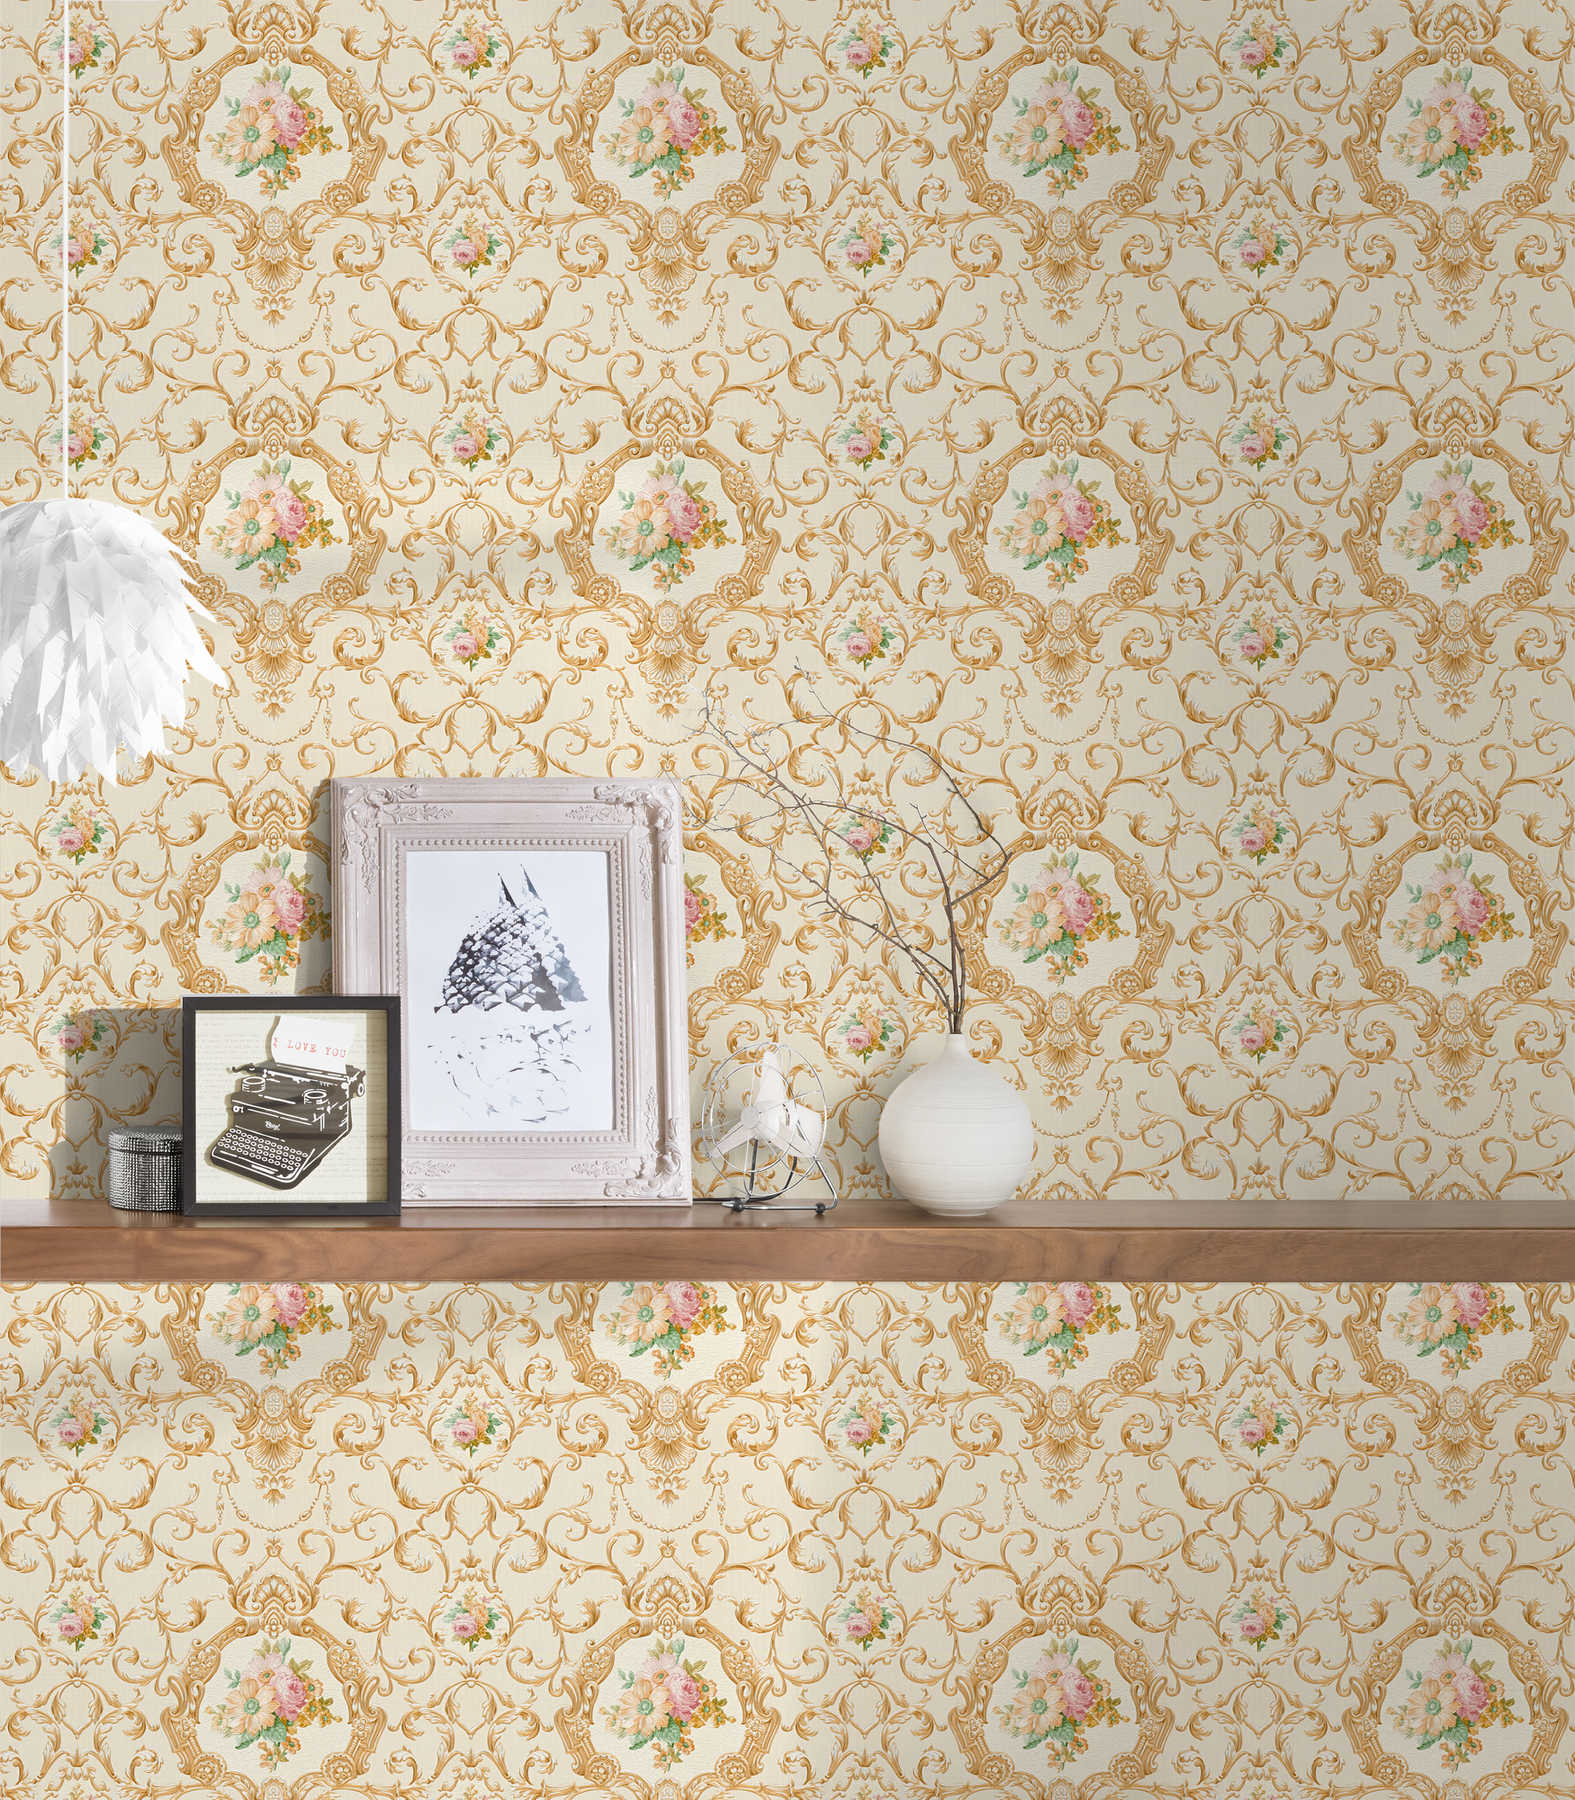             Opulent wallpaper with ornamental pattern & flowers - metallic
        